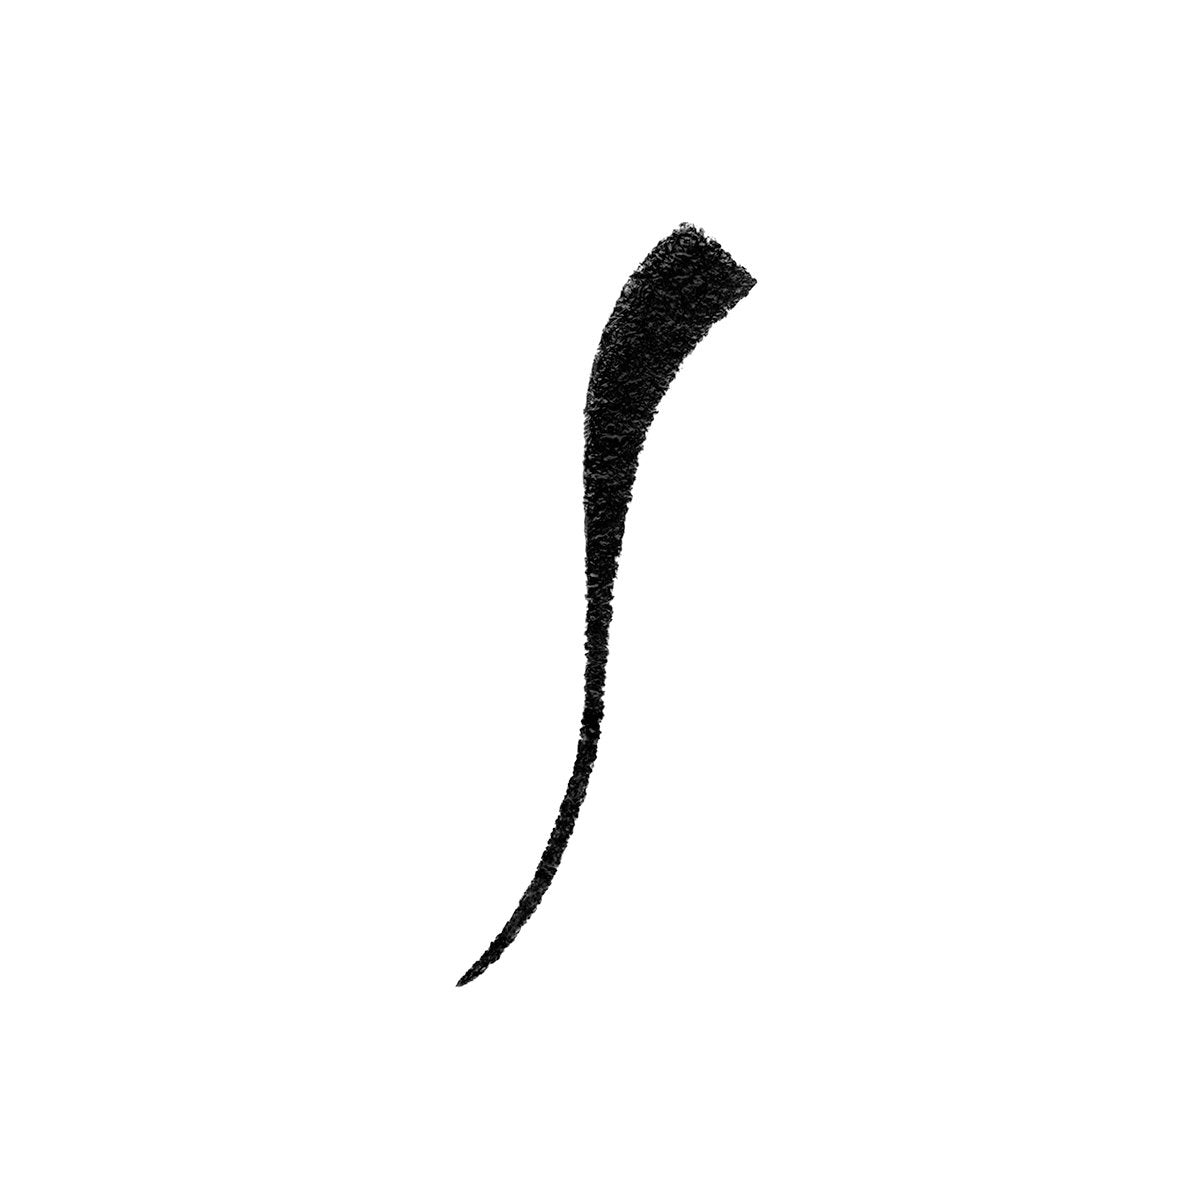 CHAT NOIR - INKY BLACK - black liquid refillable eyeliner